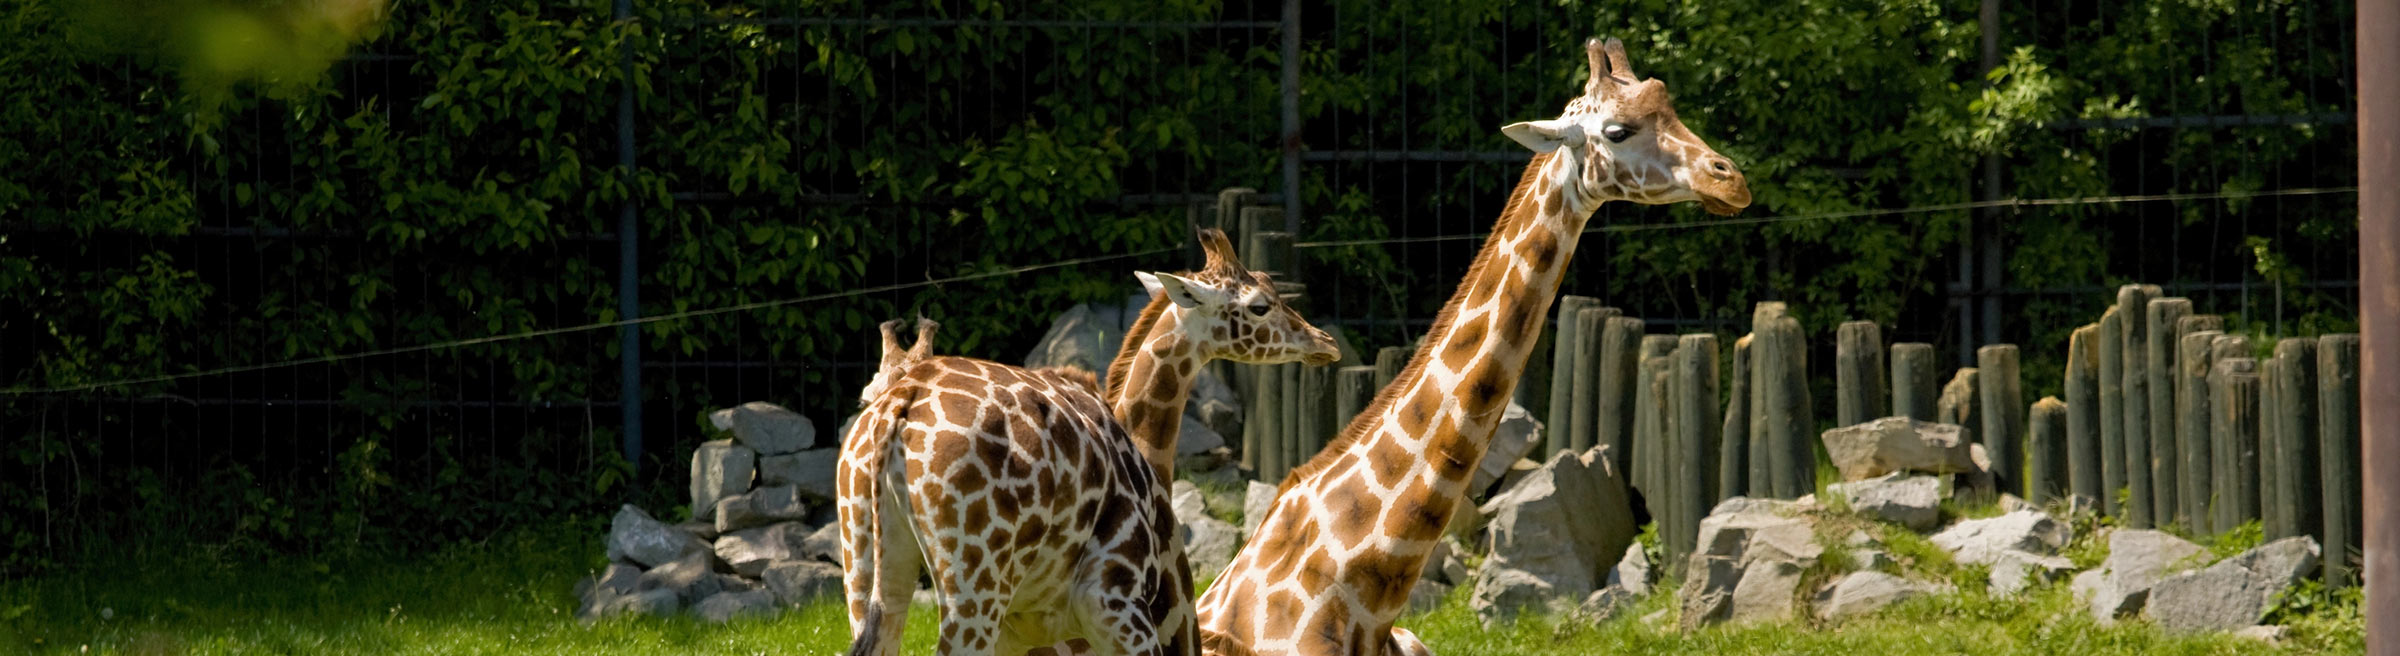 Giraffes enjoy their Dominion Hemp hemp bedding at The Maryland Zoo